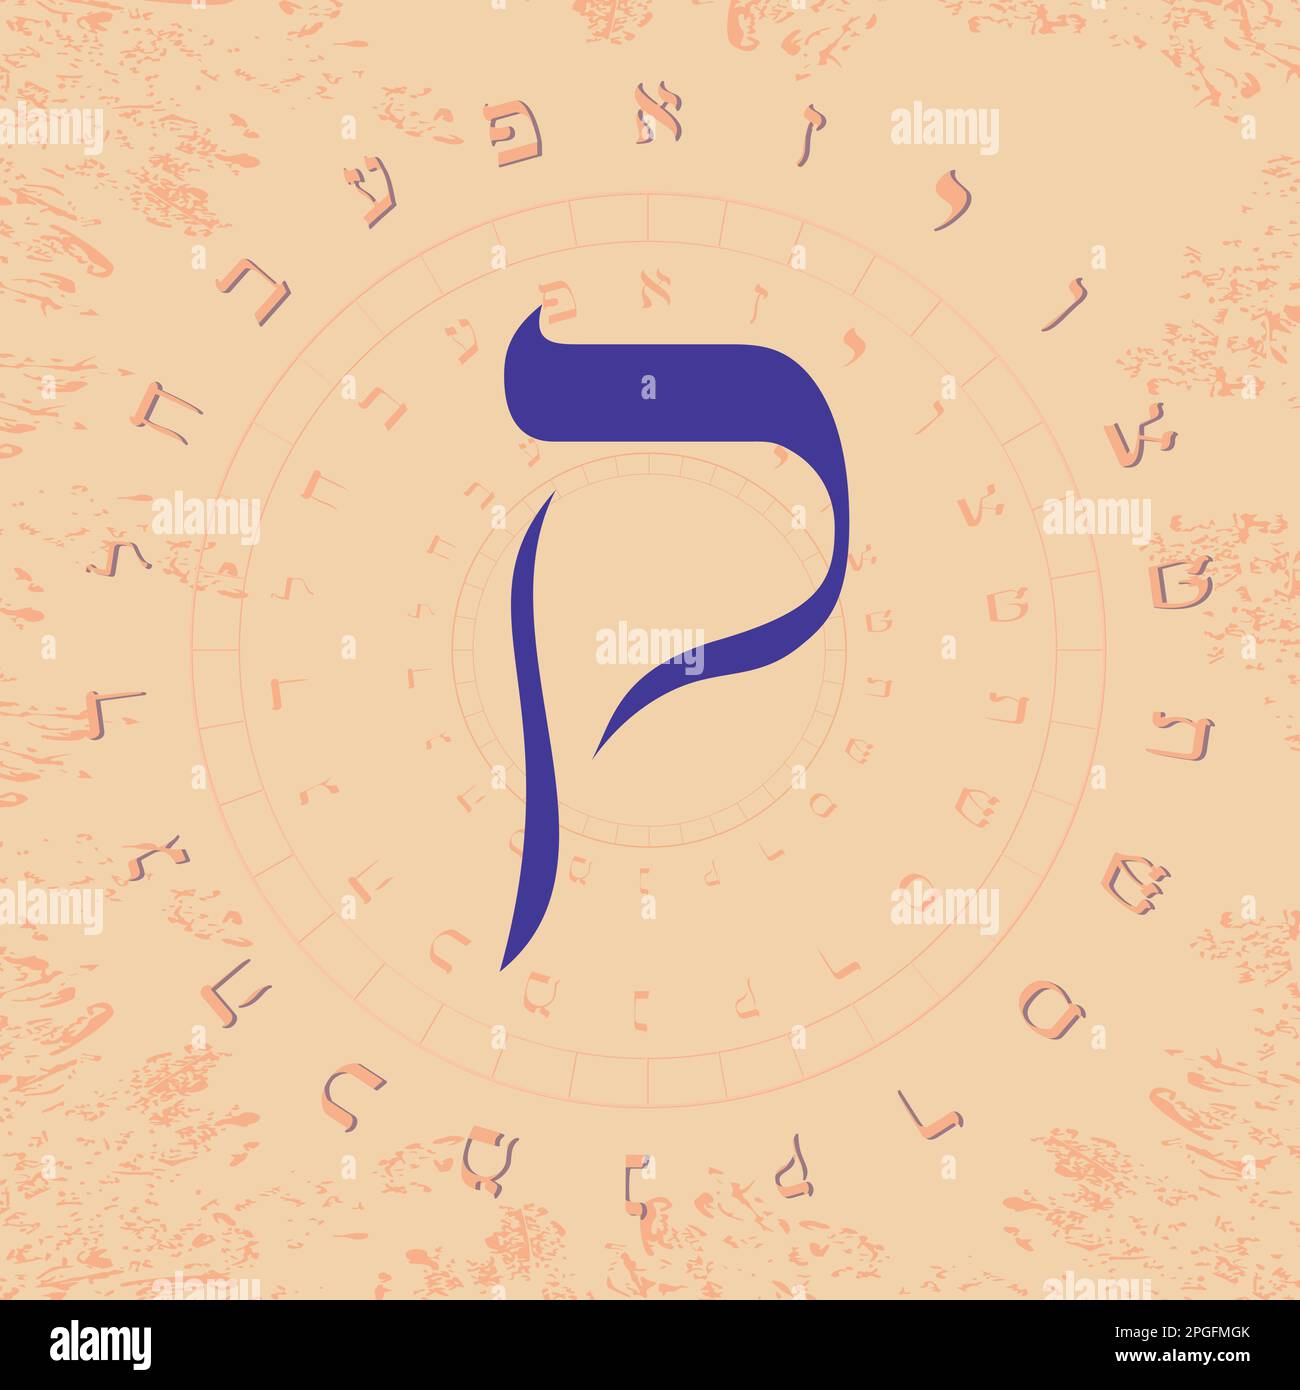 Vector illustration of the Hebrew alphabet in circular design. Large ...